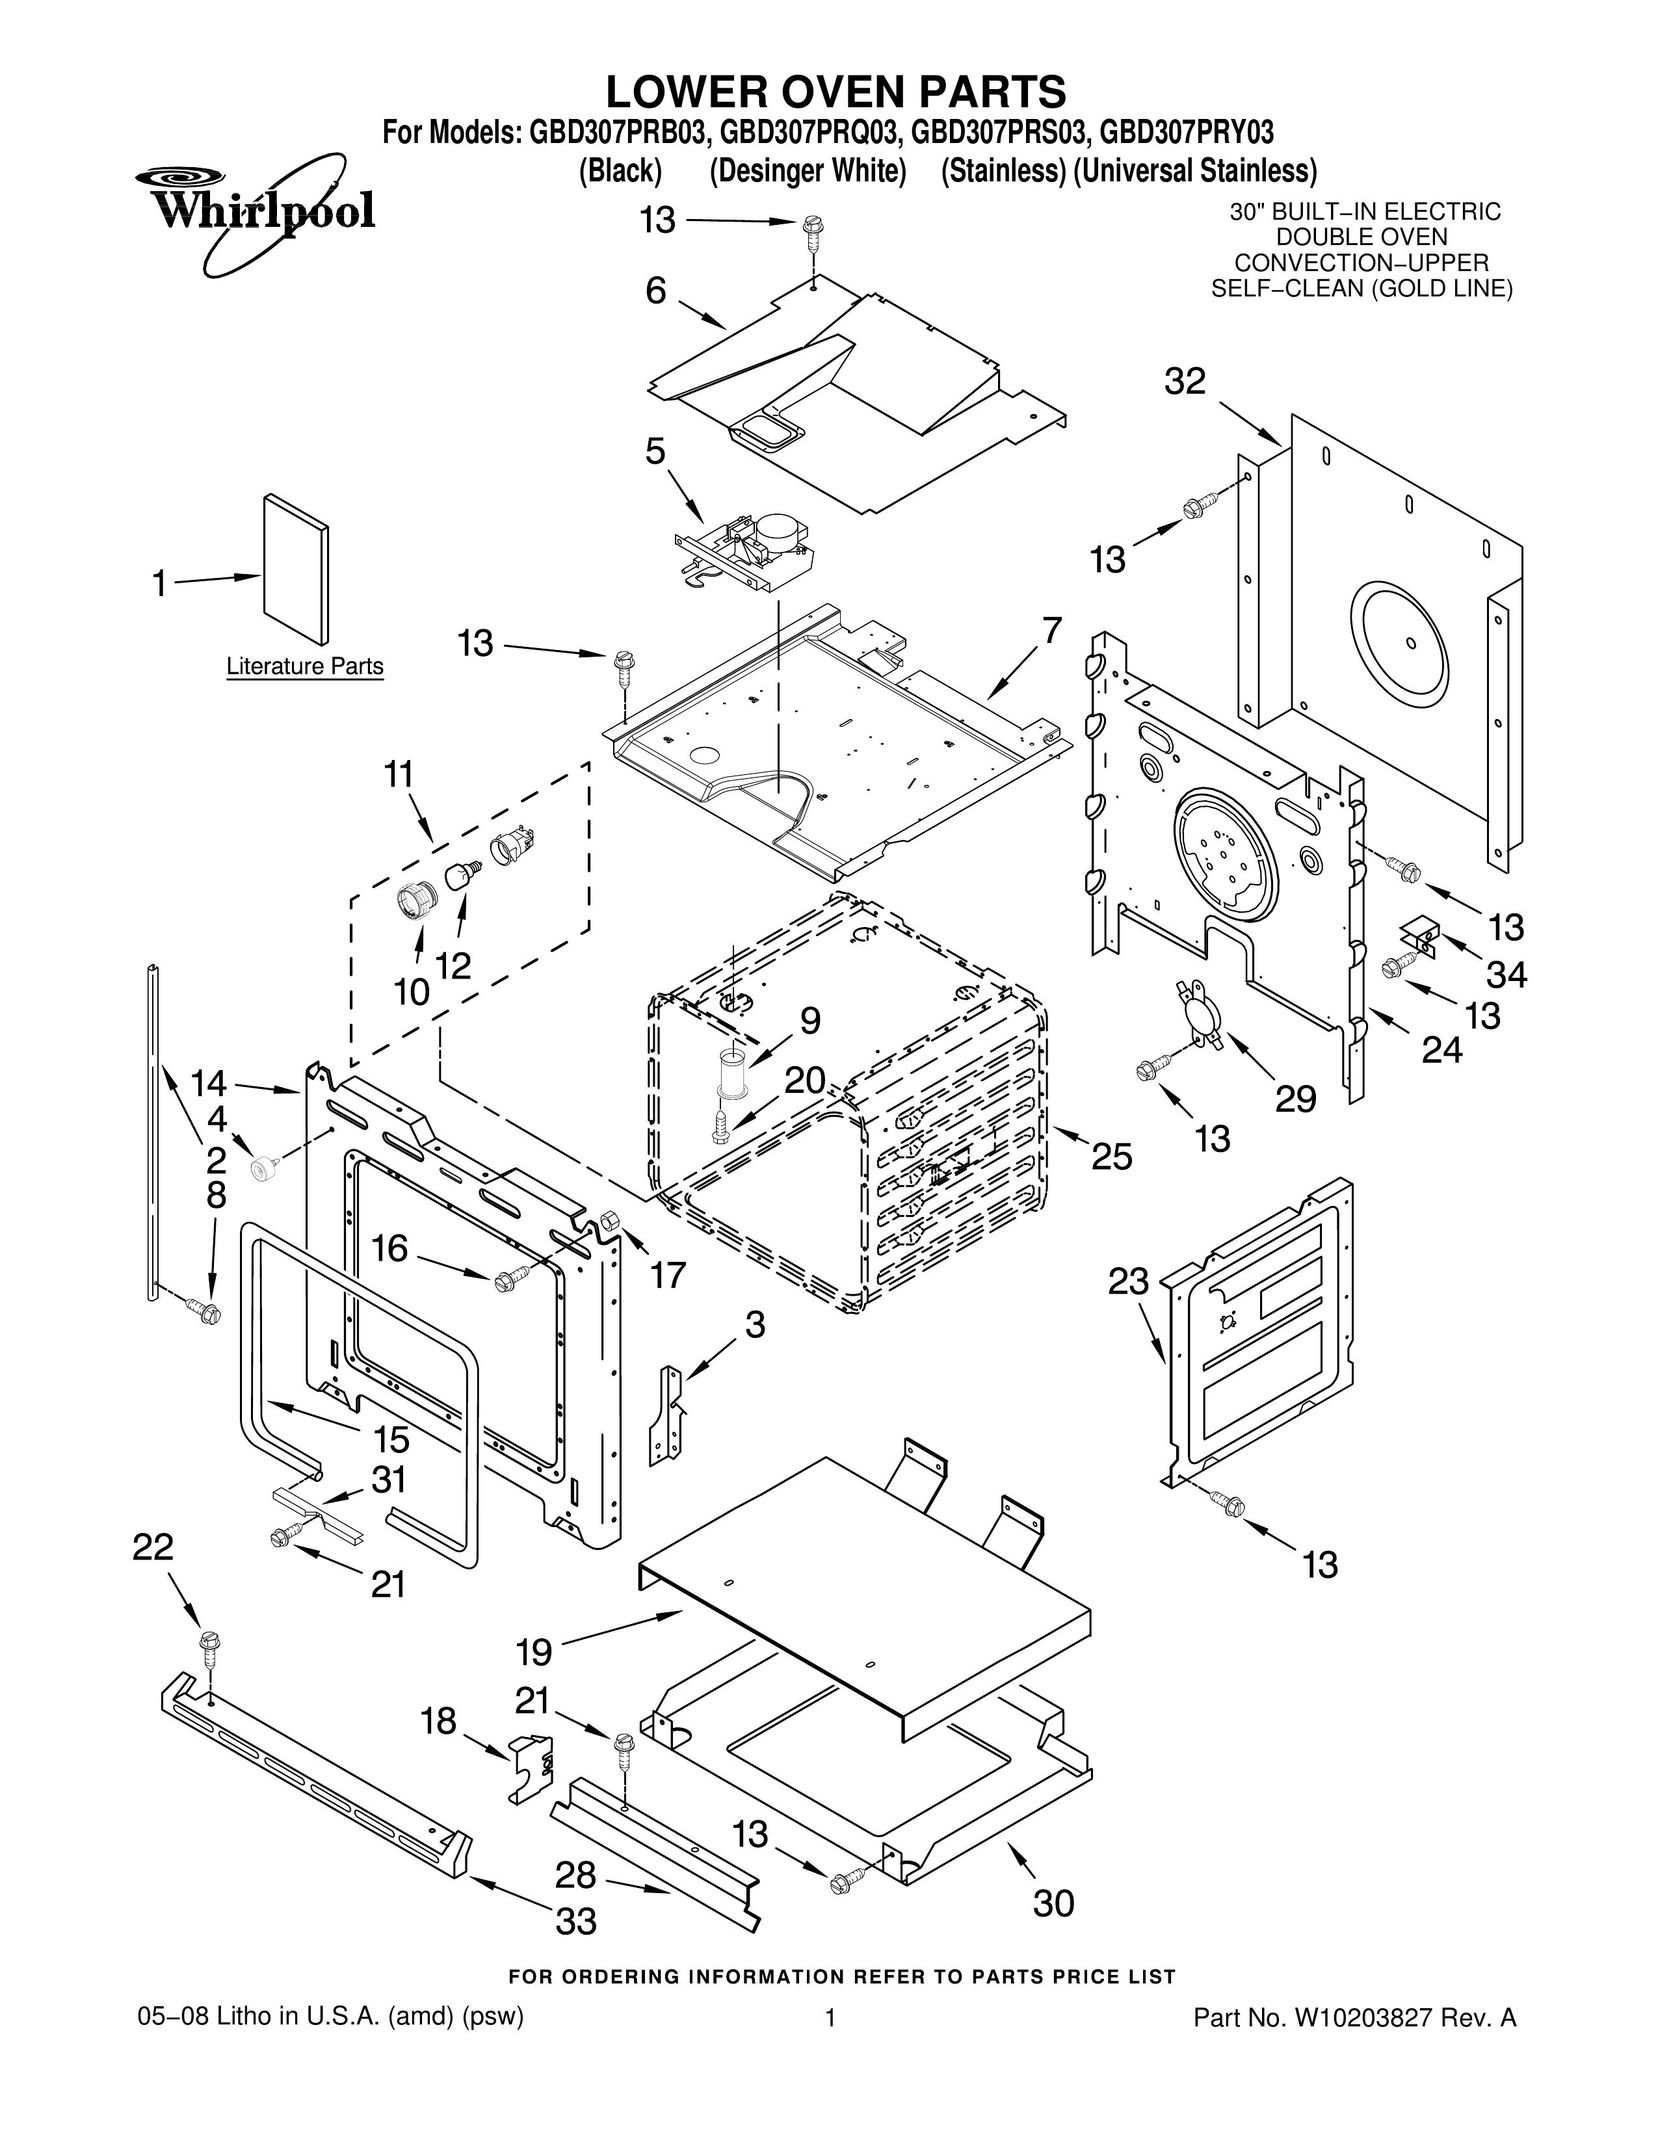 Whirlpool GBD307PRQ03 Oven User Manual